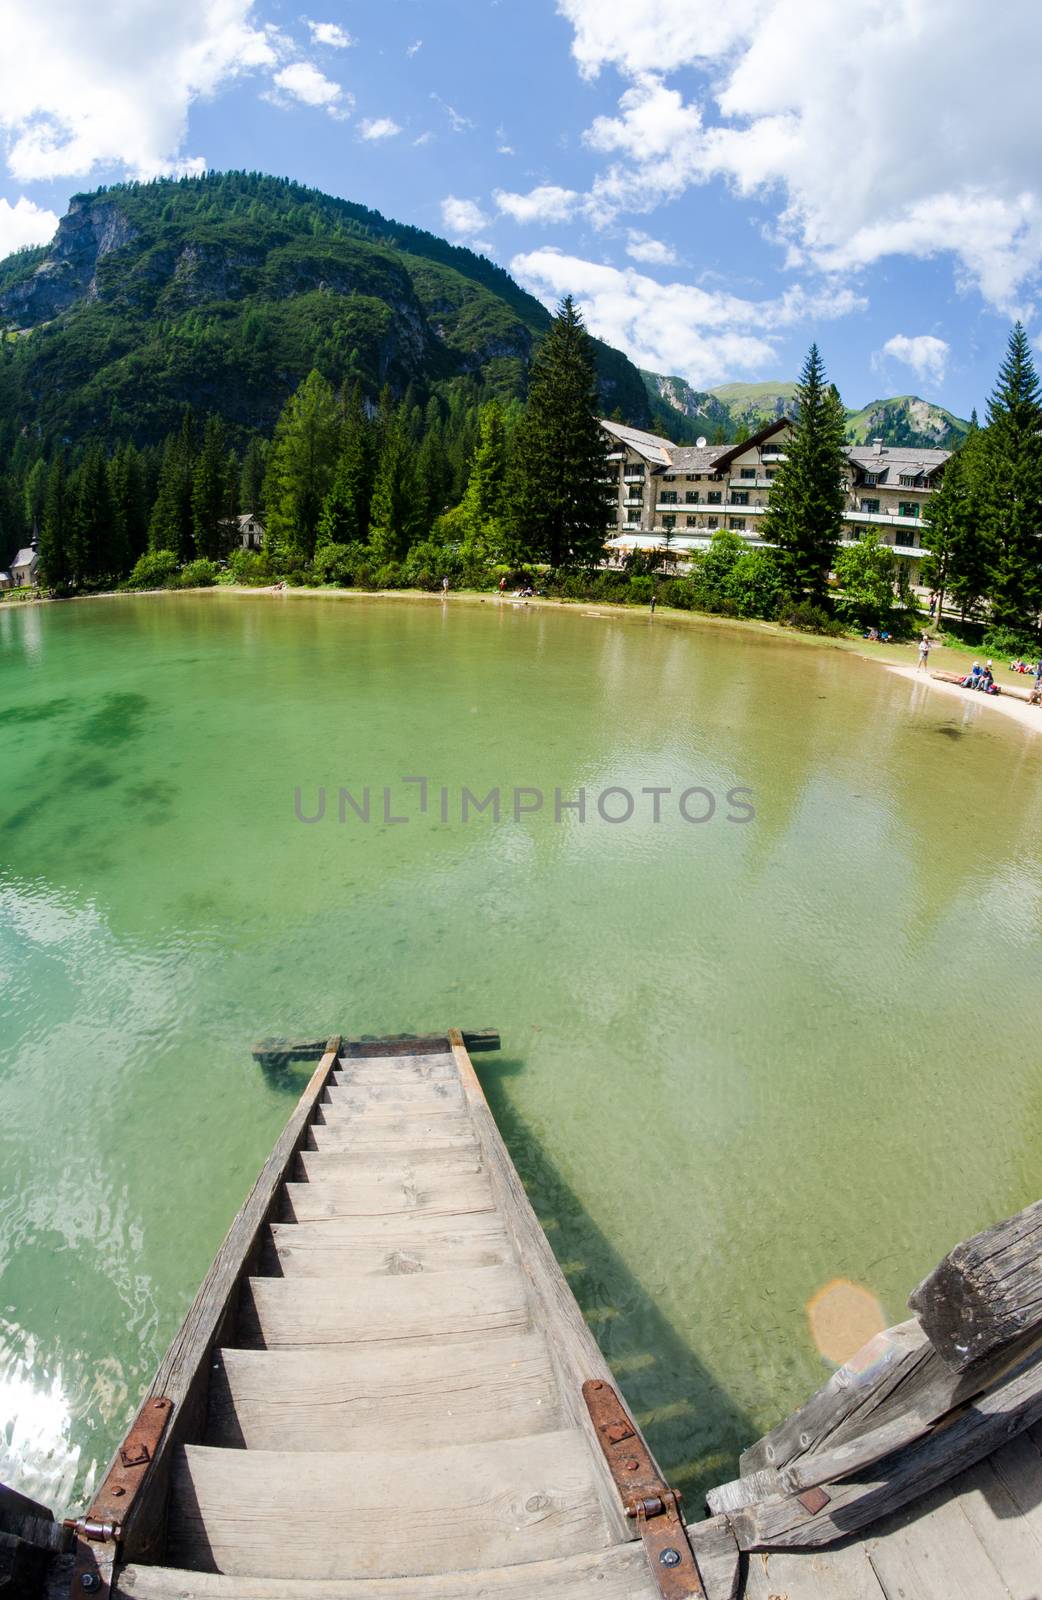 Wonderful waters of Braies lake on a summer day - Italian Alps.